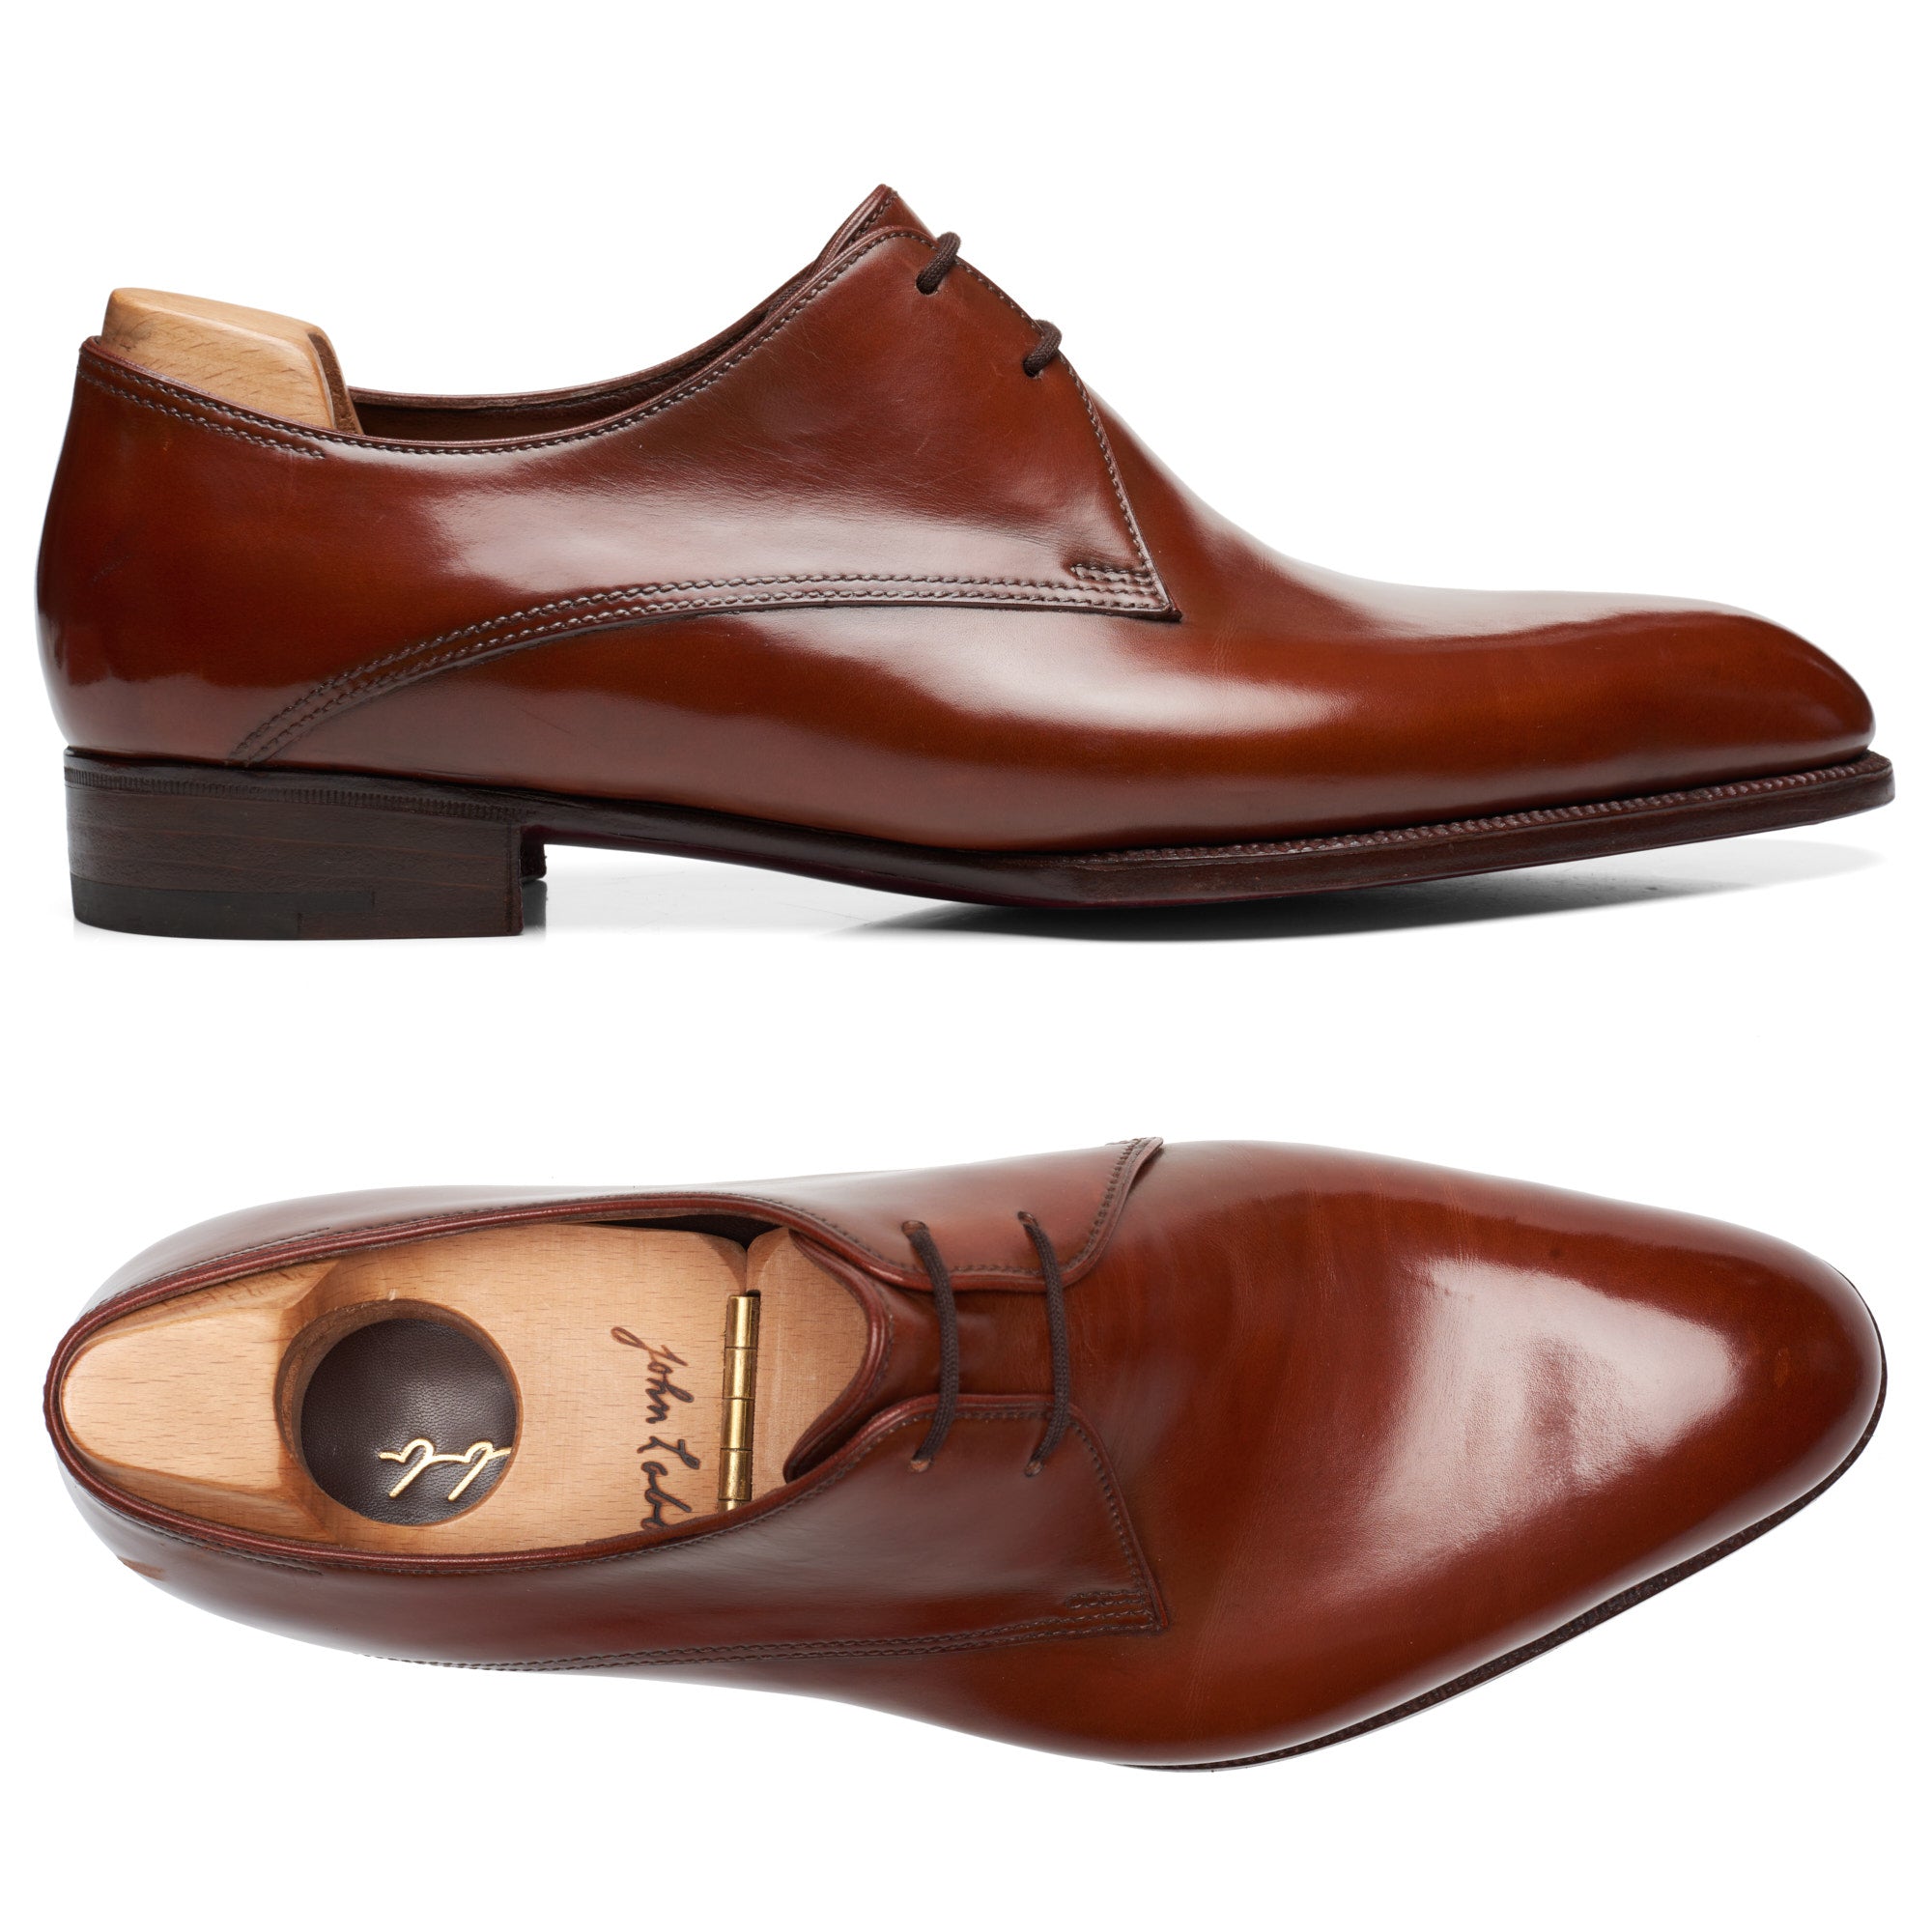 JOHN LOBB Paris Bespoke Brown Calf Leather 2 Eyelet Derby Shoes UK 7.5 US 8.5